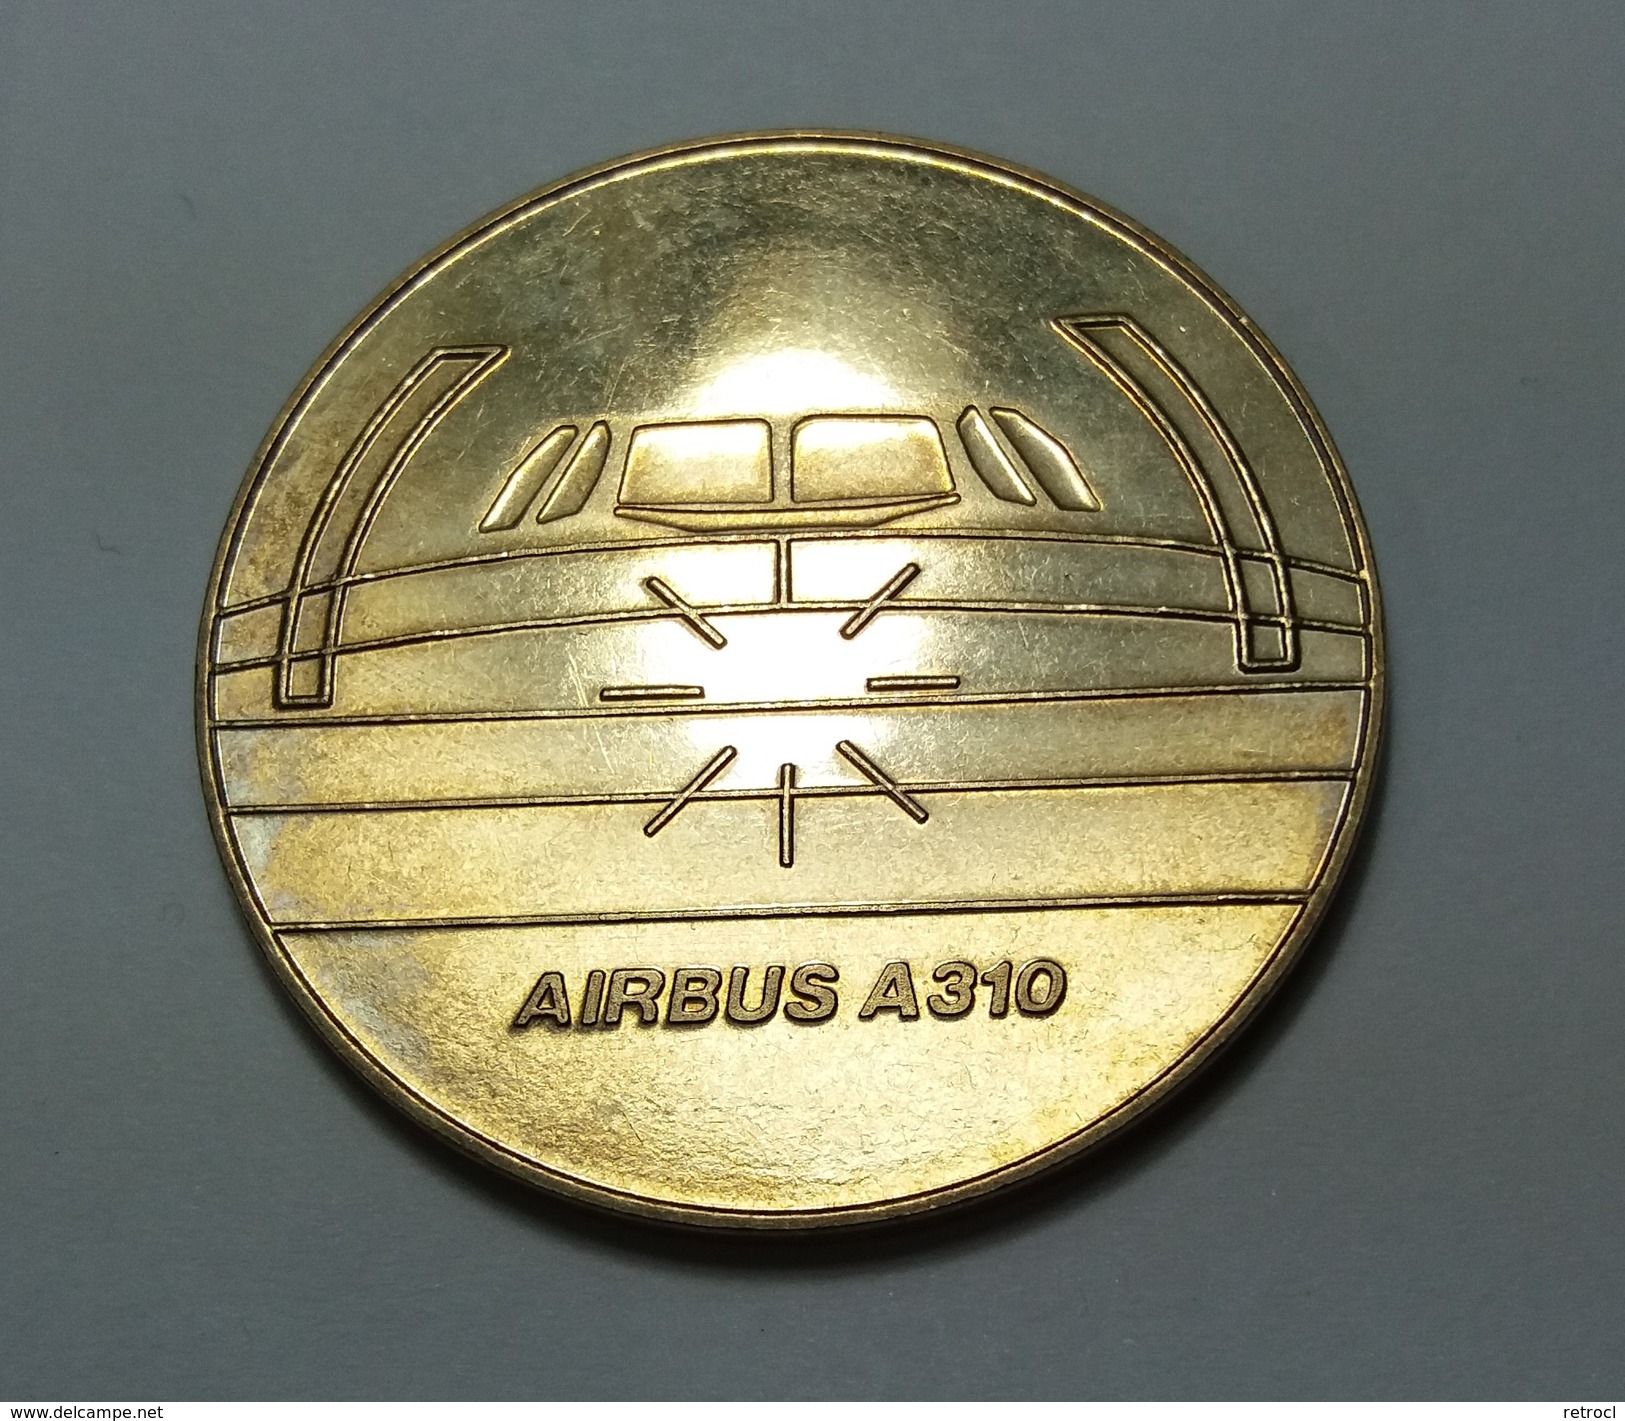 Airbus A310 - Mit Dem Condor Airbus A310 - Zur Erinnerung An Ihren Flug - Professionnels/De Société